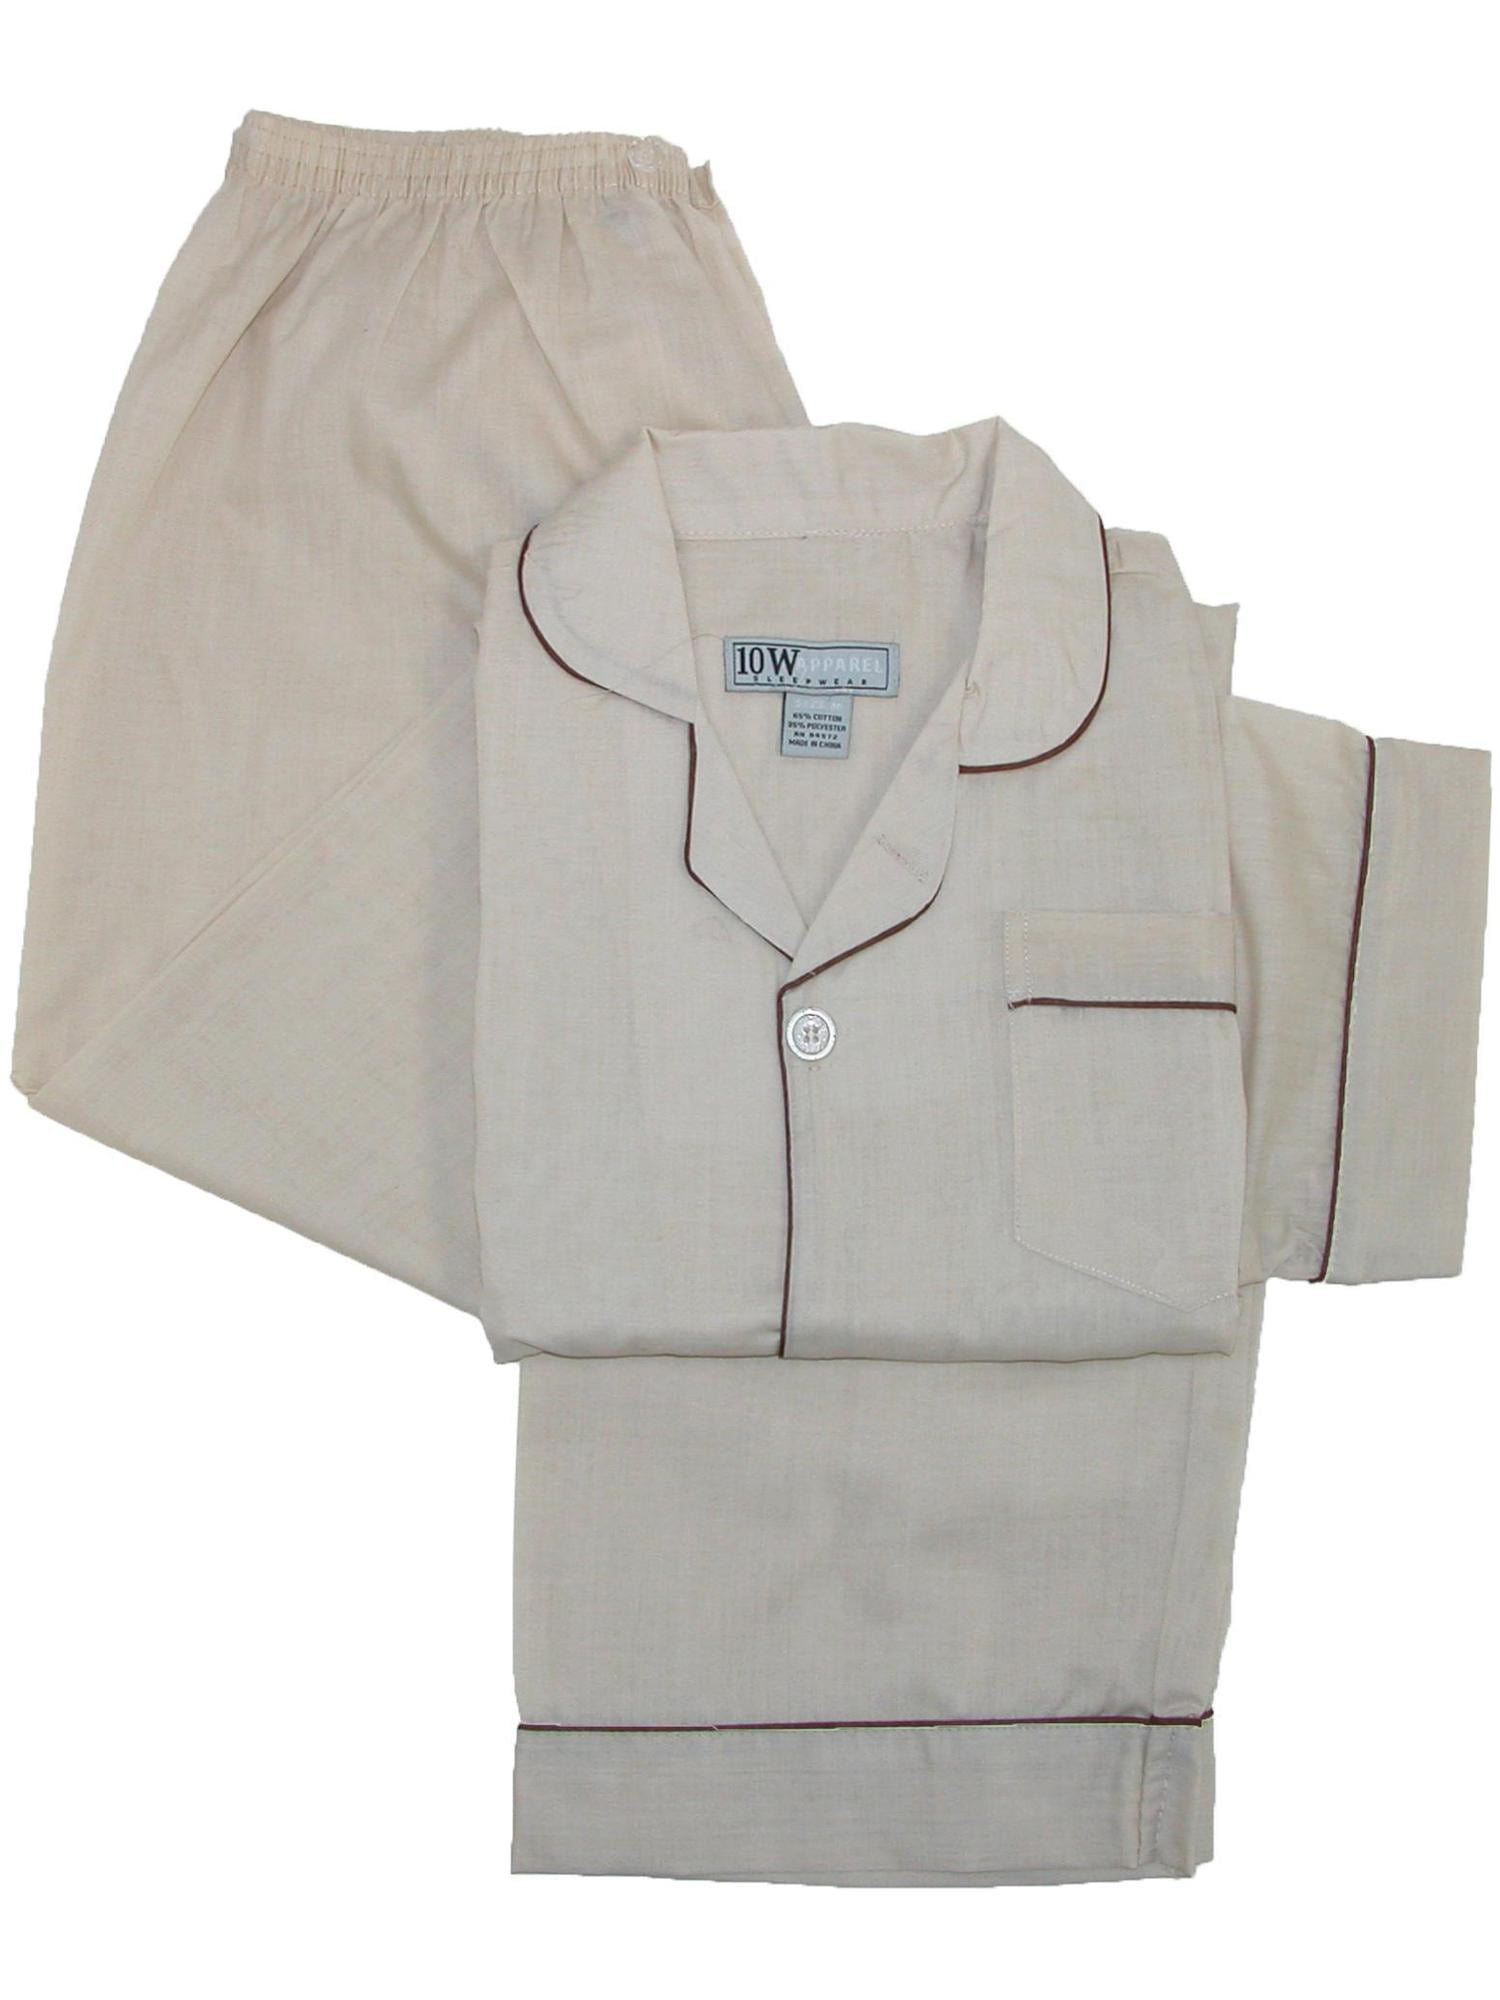 Ten West Apparel Men’s Pajamas Cotton Short Sleeve Tee and Shorts Sleepwear Set 